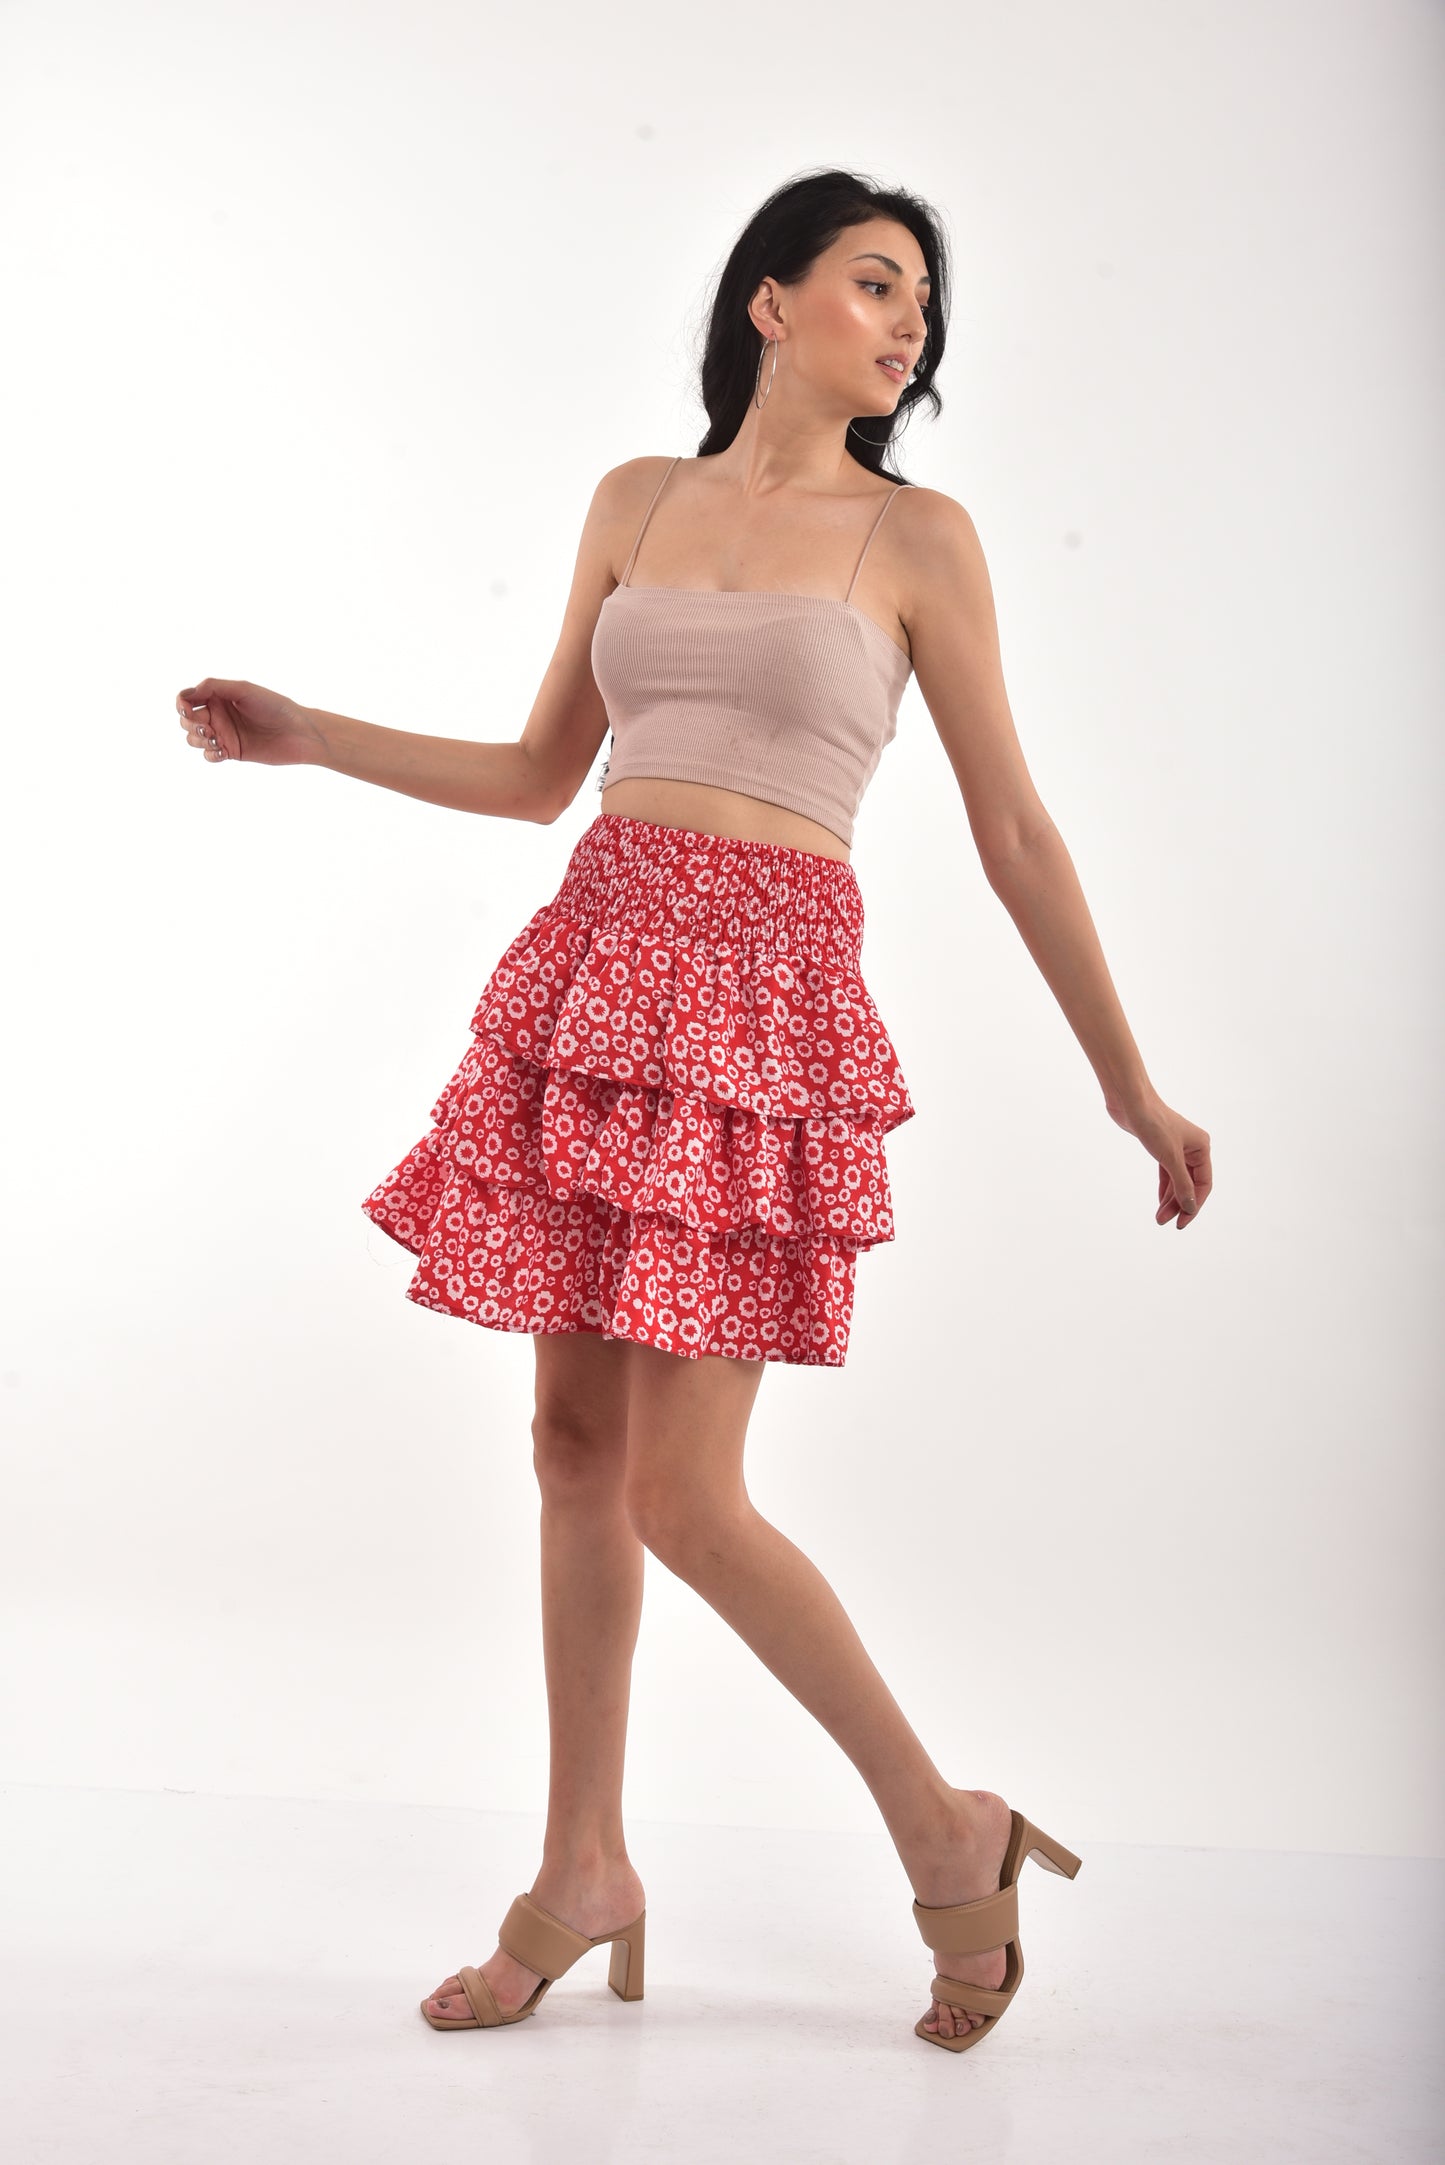 Mini Floral Skirt